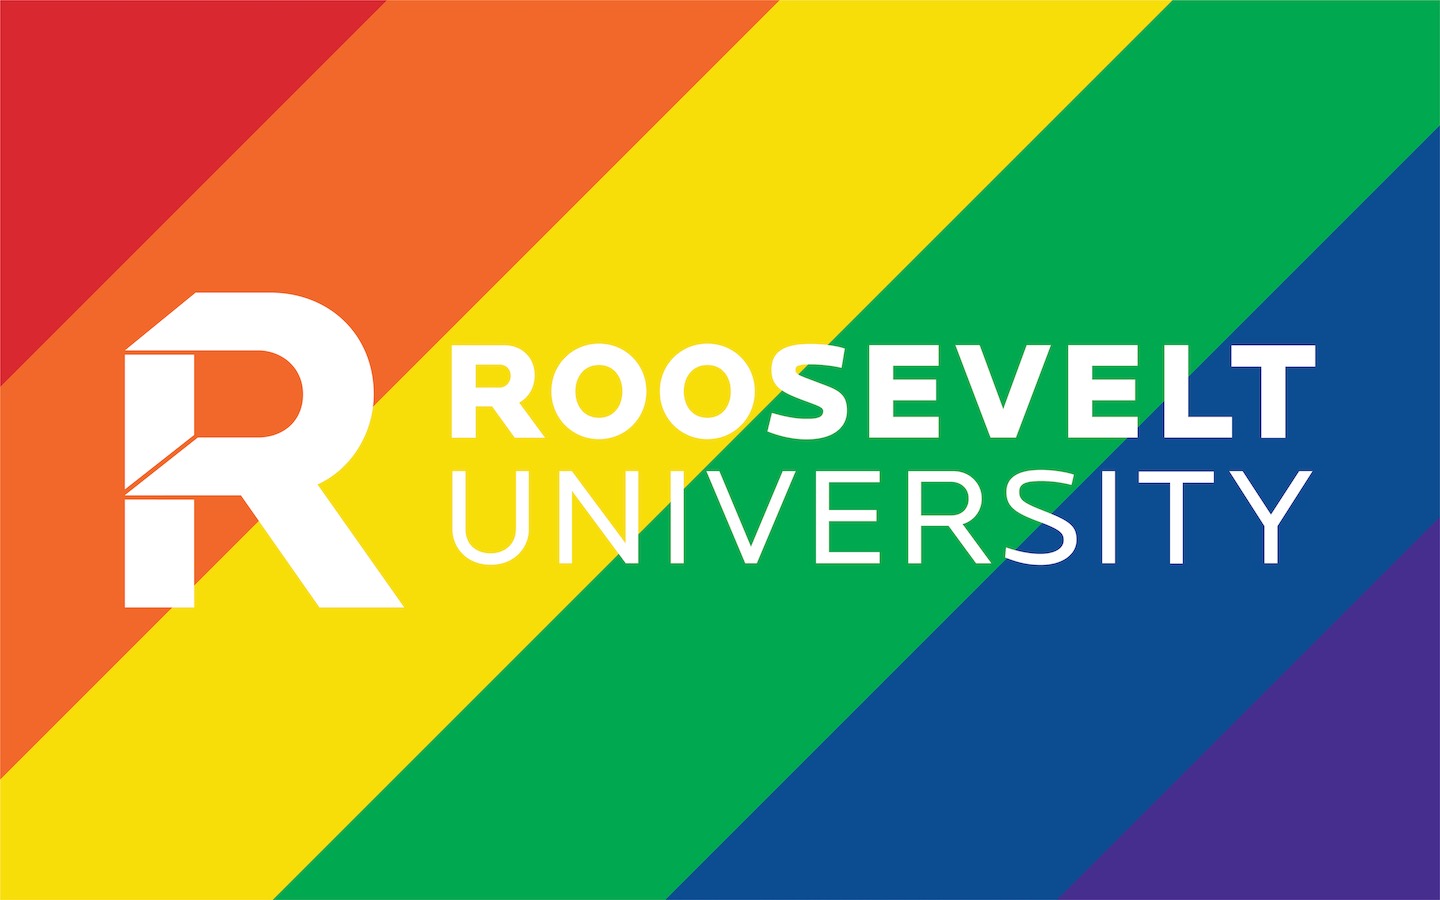 Roosevelt University celebrates Pride Month